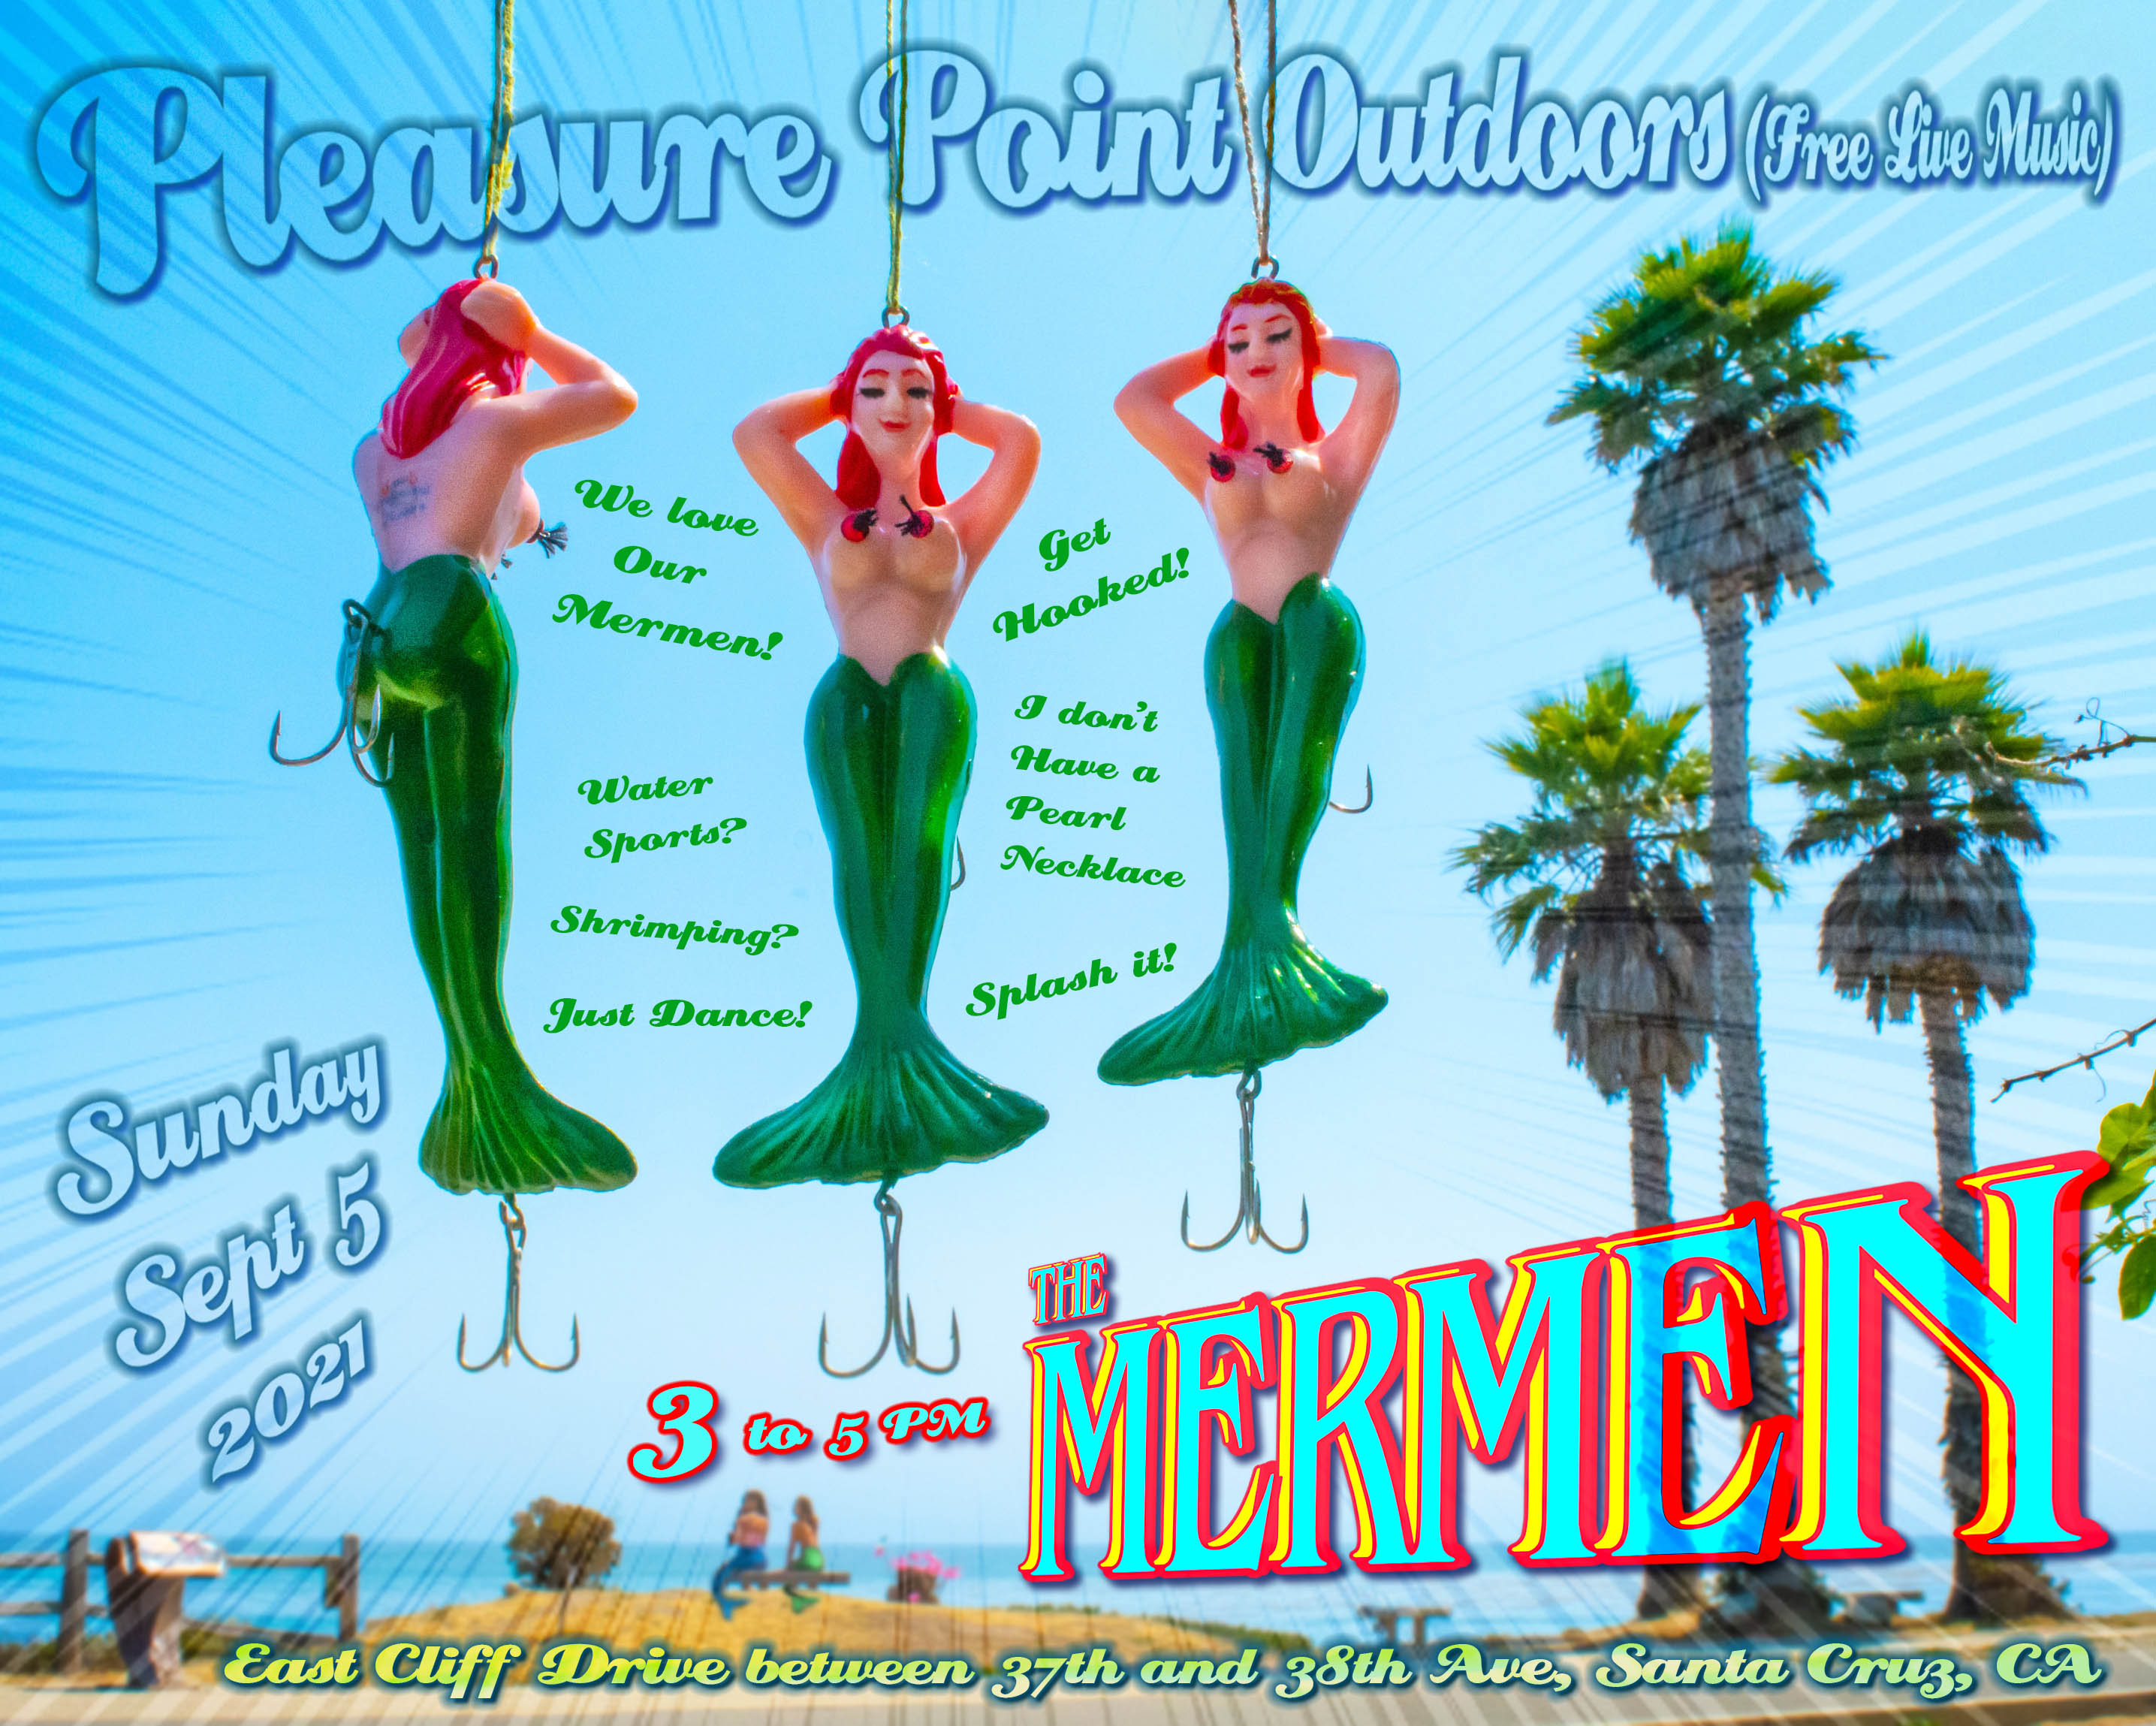 20210905 The Mermen at Pleasure Point Outdoors, Santa Cruz